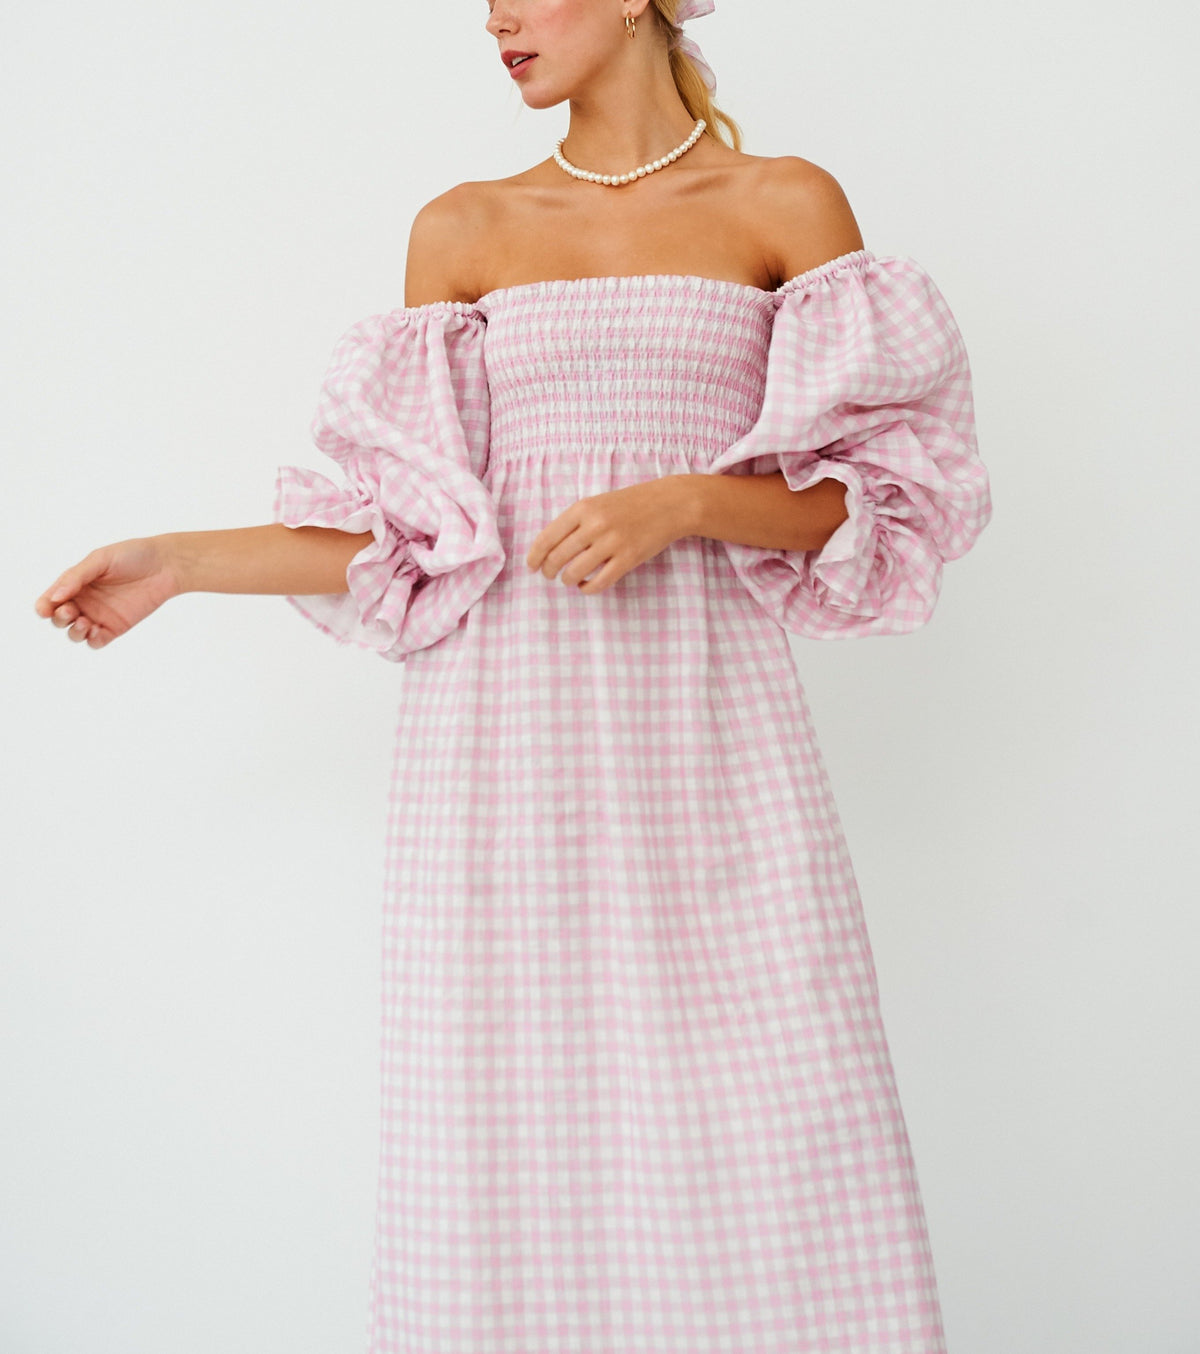 Atlanta Linen Dress in Pink Vichy